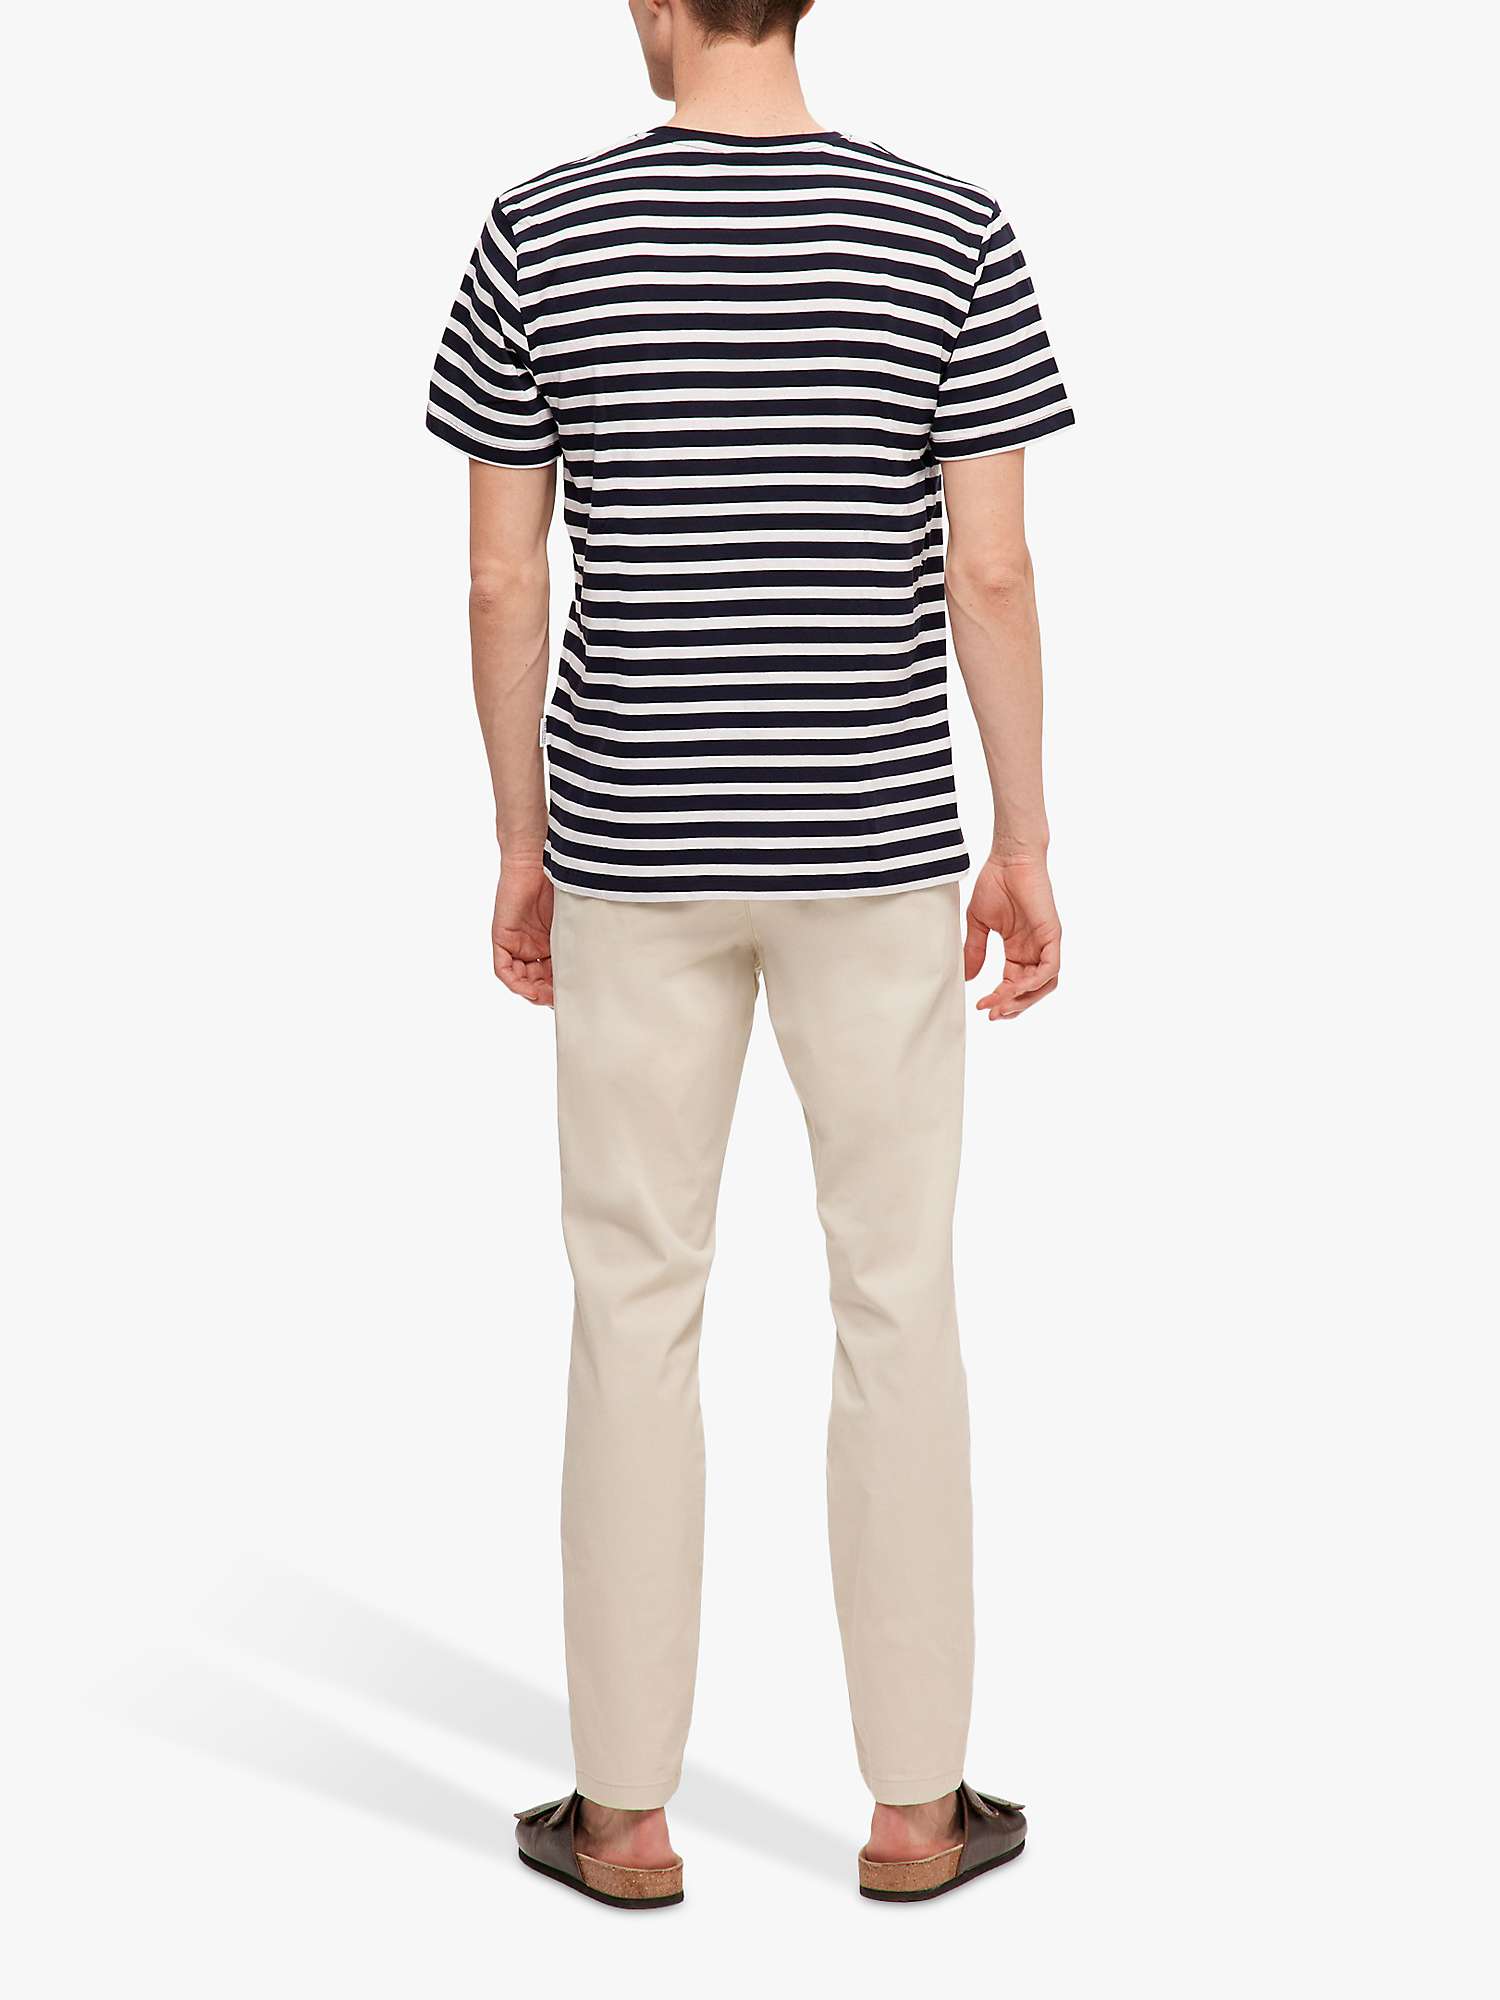 Buy SELECTED HOMME Stripe Organic Cotton T-Shirt, Navy Blazer Online at johnlewis.com